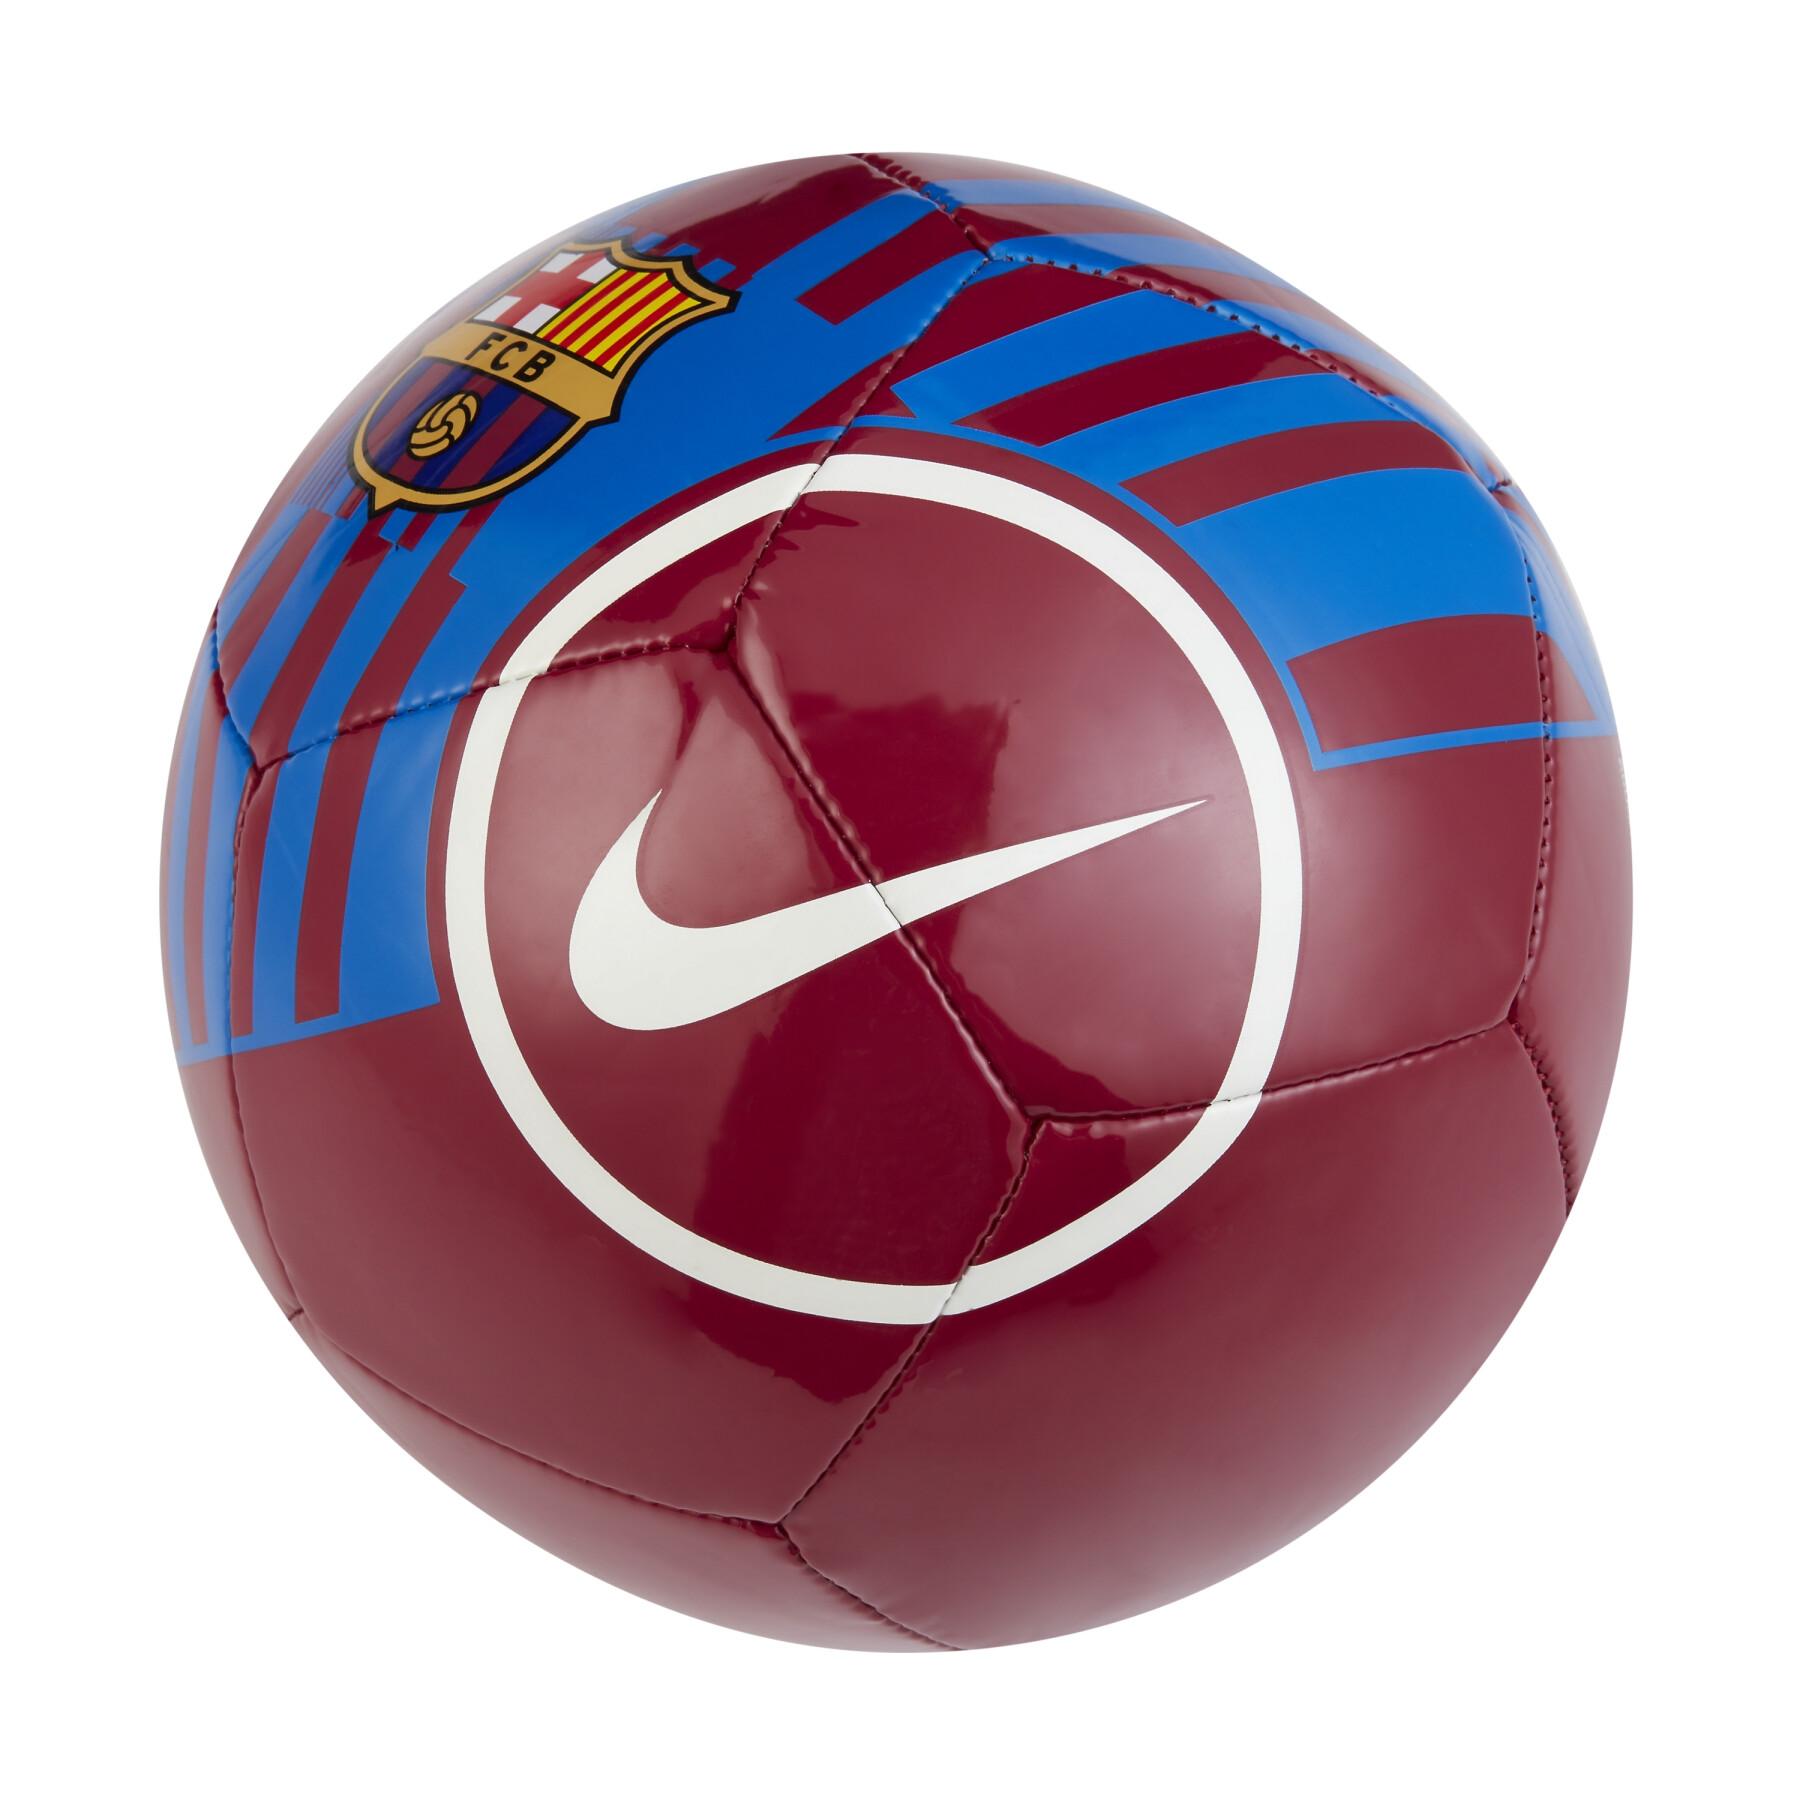 Ballon FC Barcelone Skills